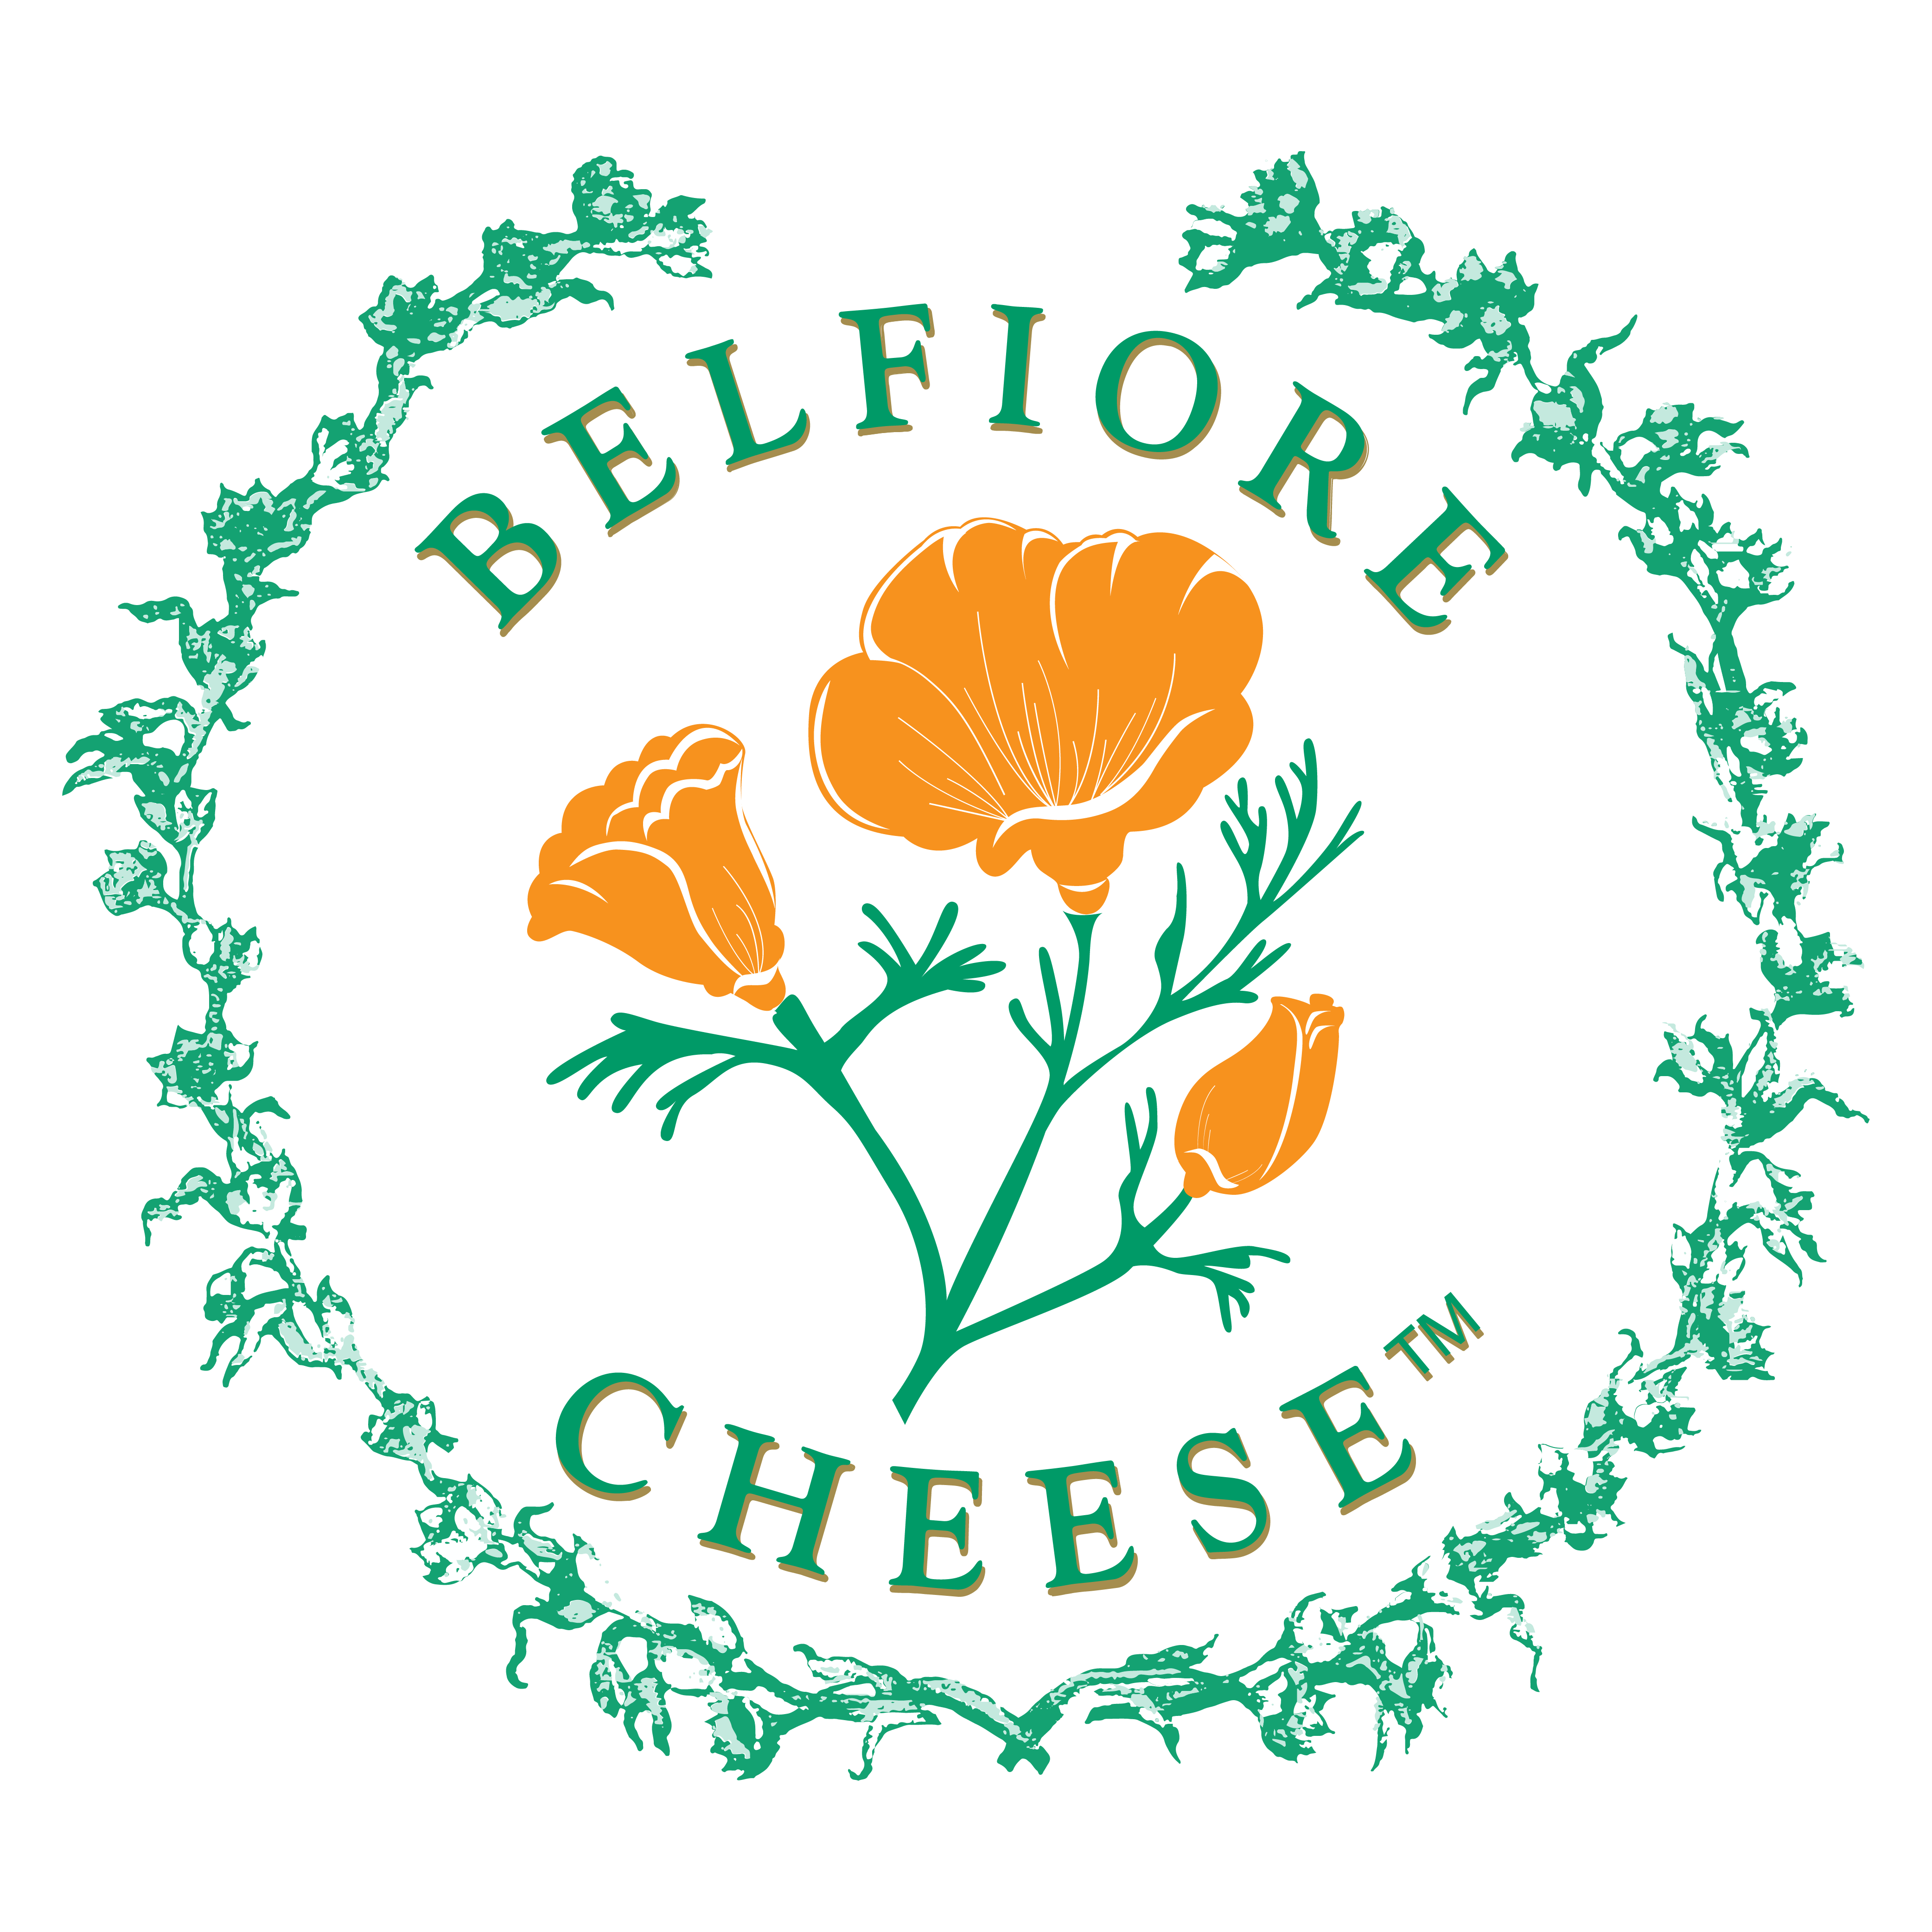 Belfiore Cheese Logo